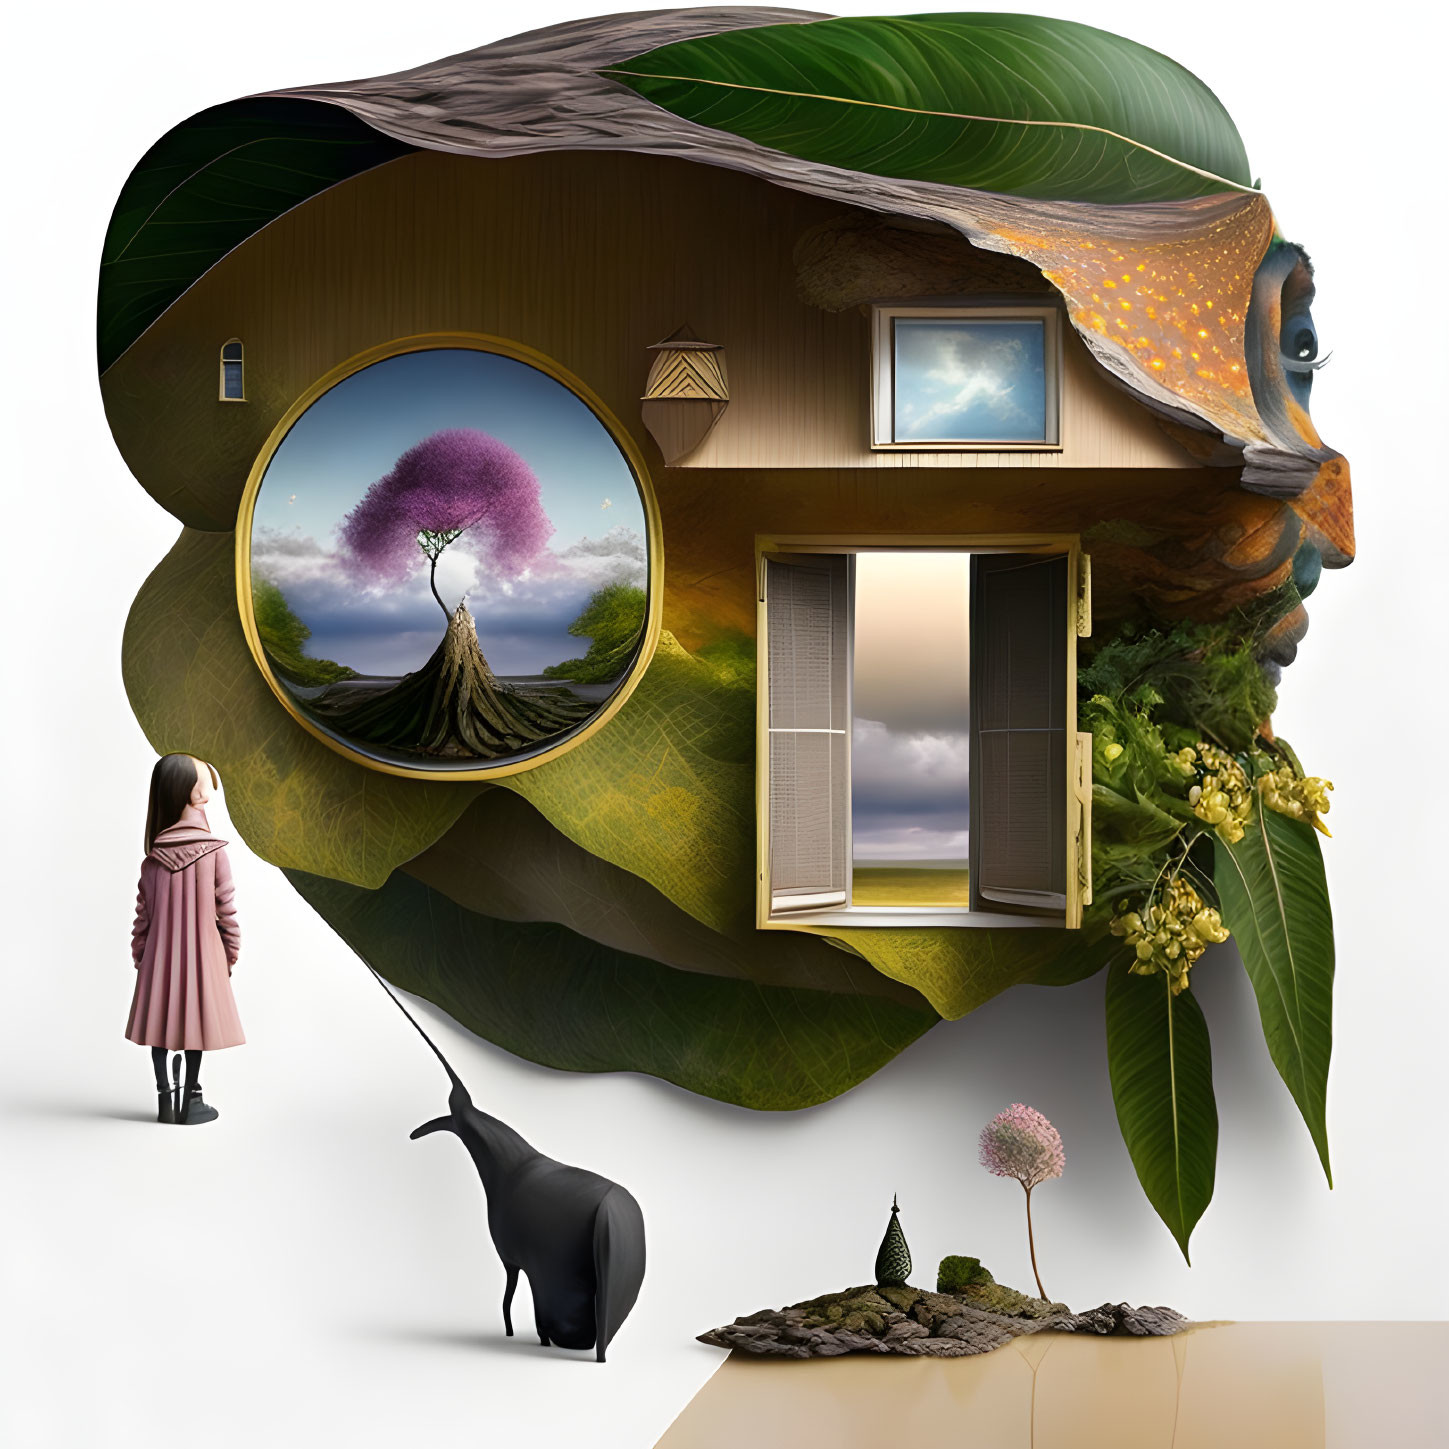 Surreal artwork: girl, dog, face-shaped house, nature elements, floating island